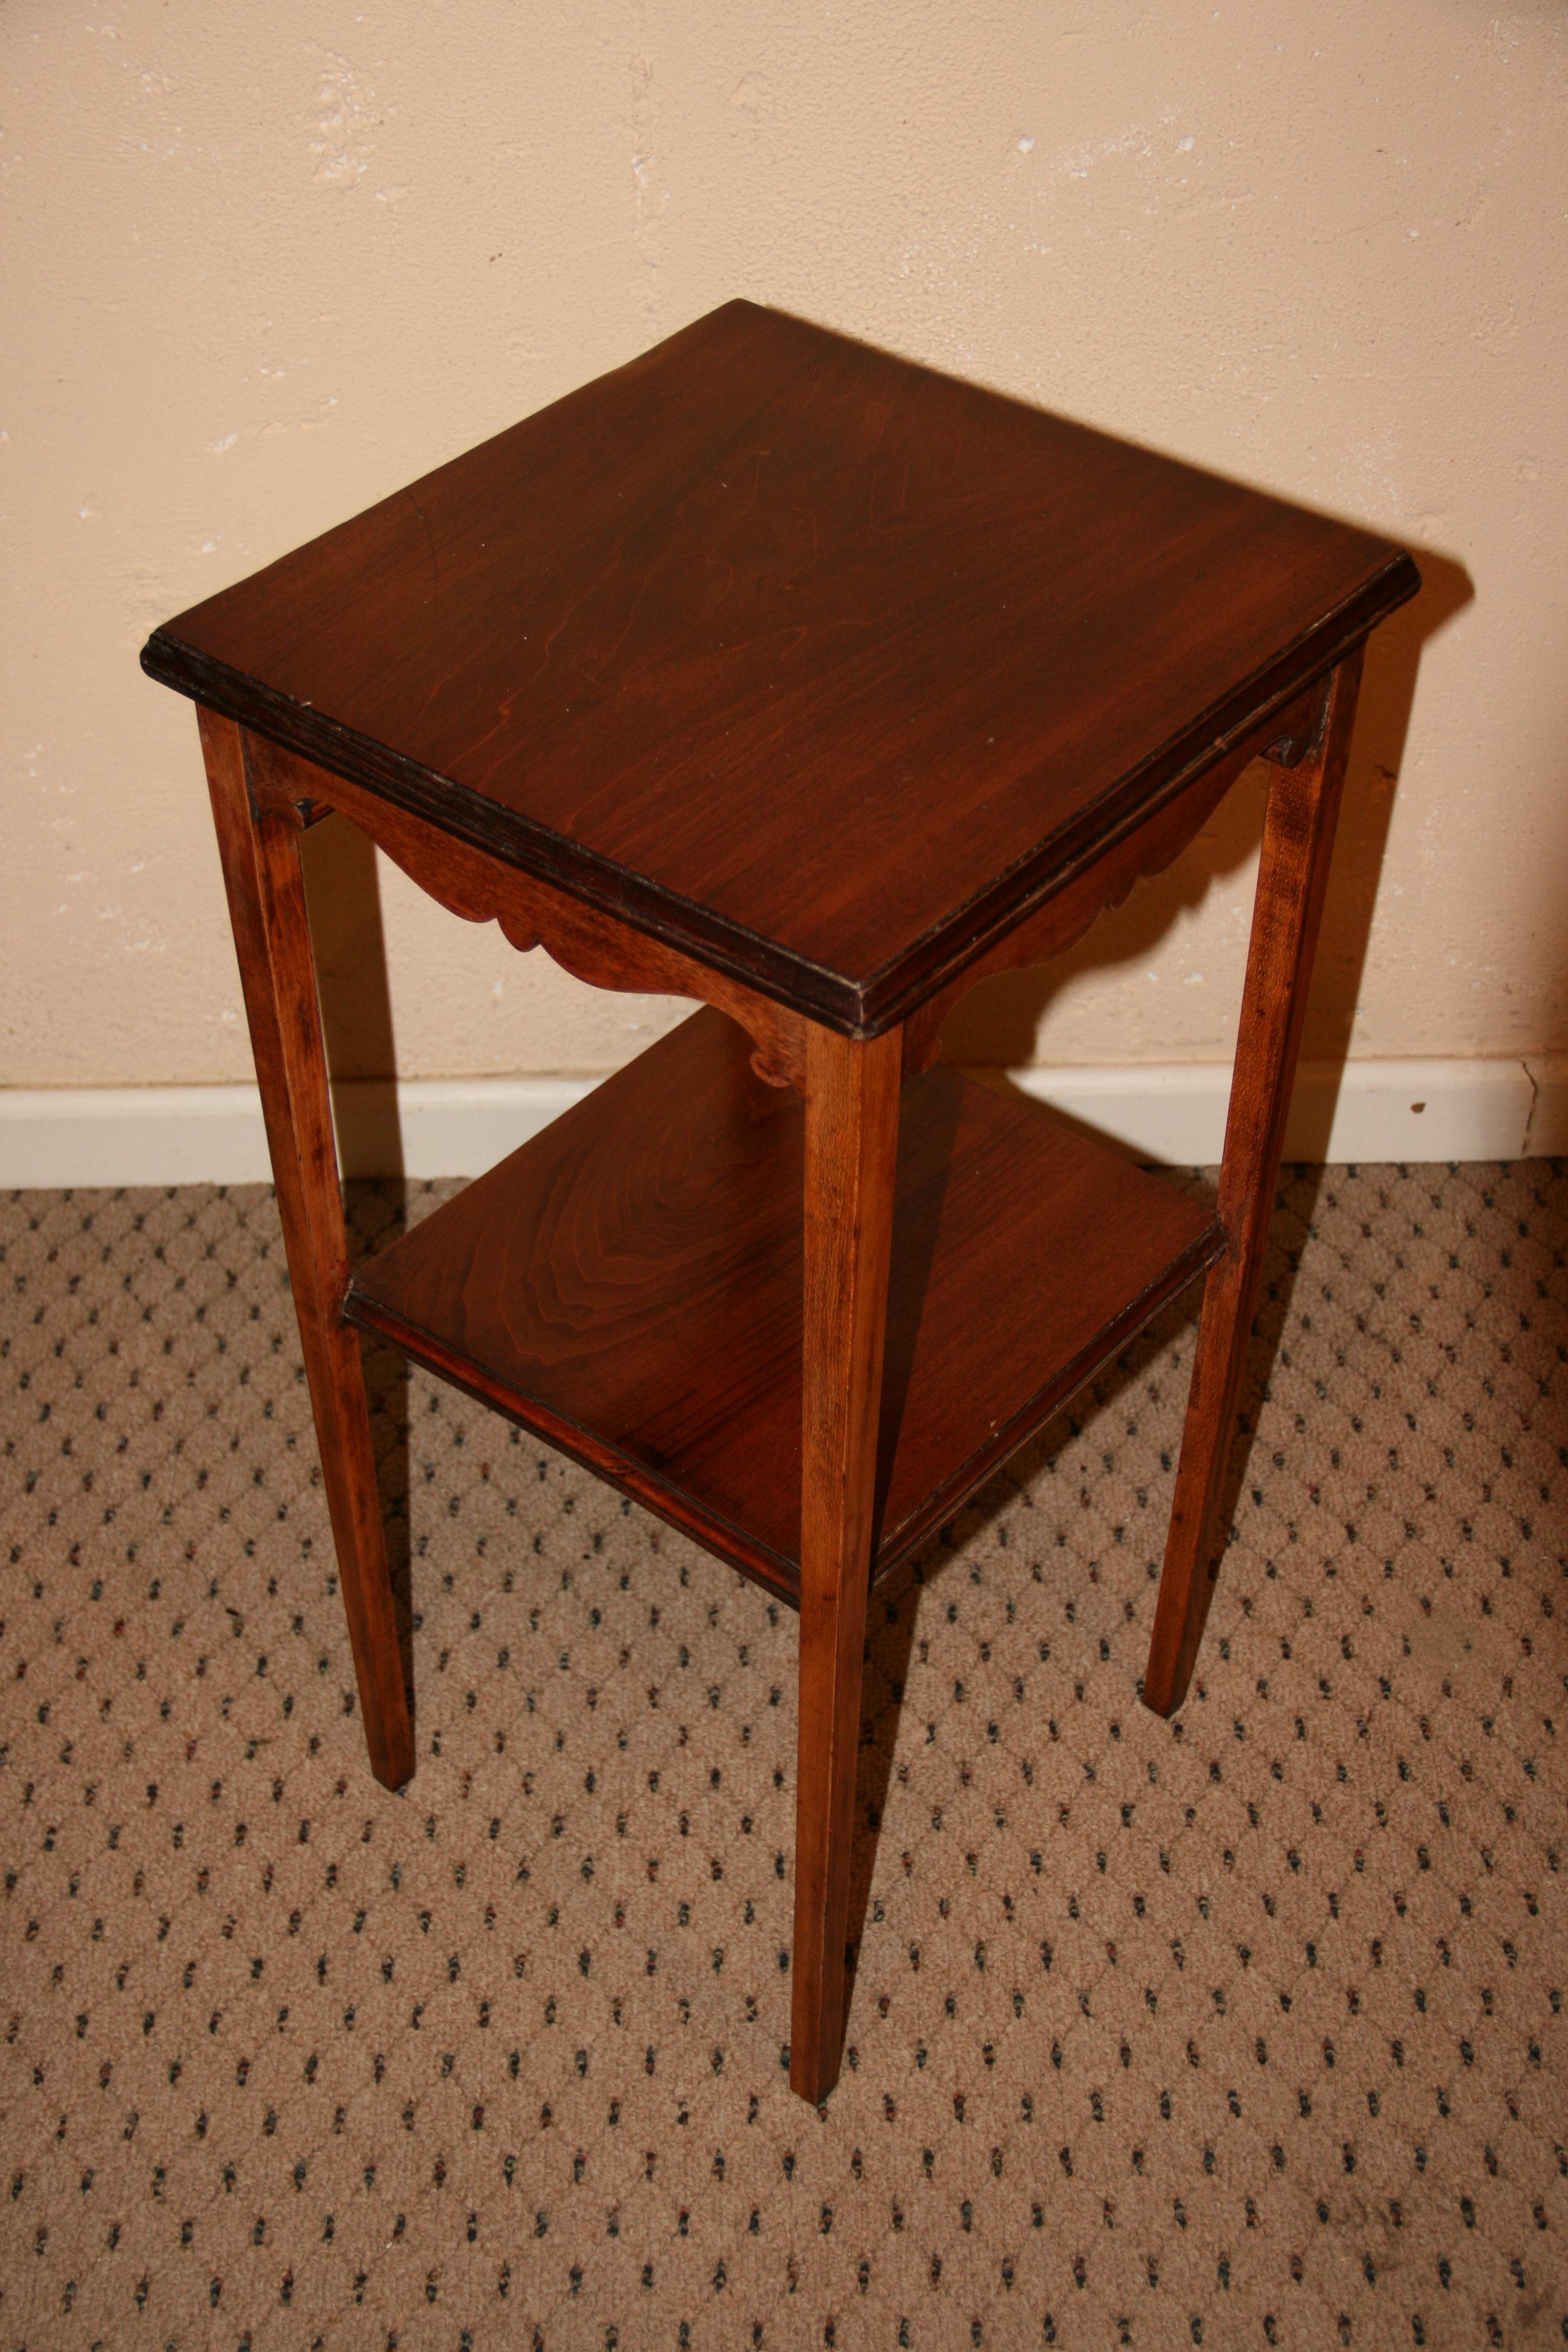 English two level hardwood side table / pedestal.